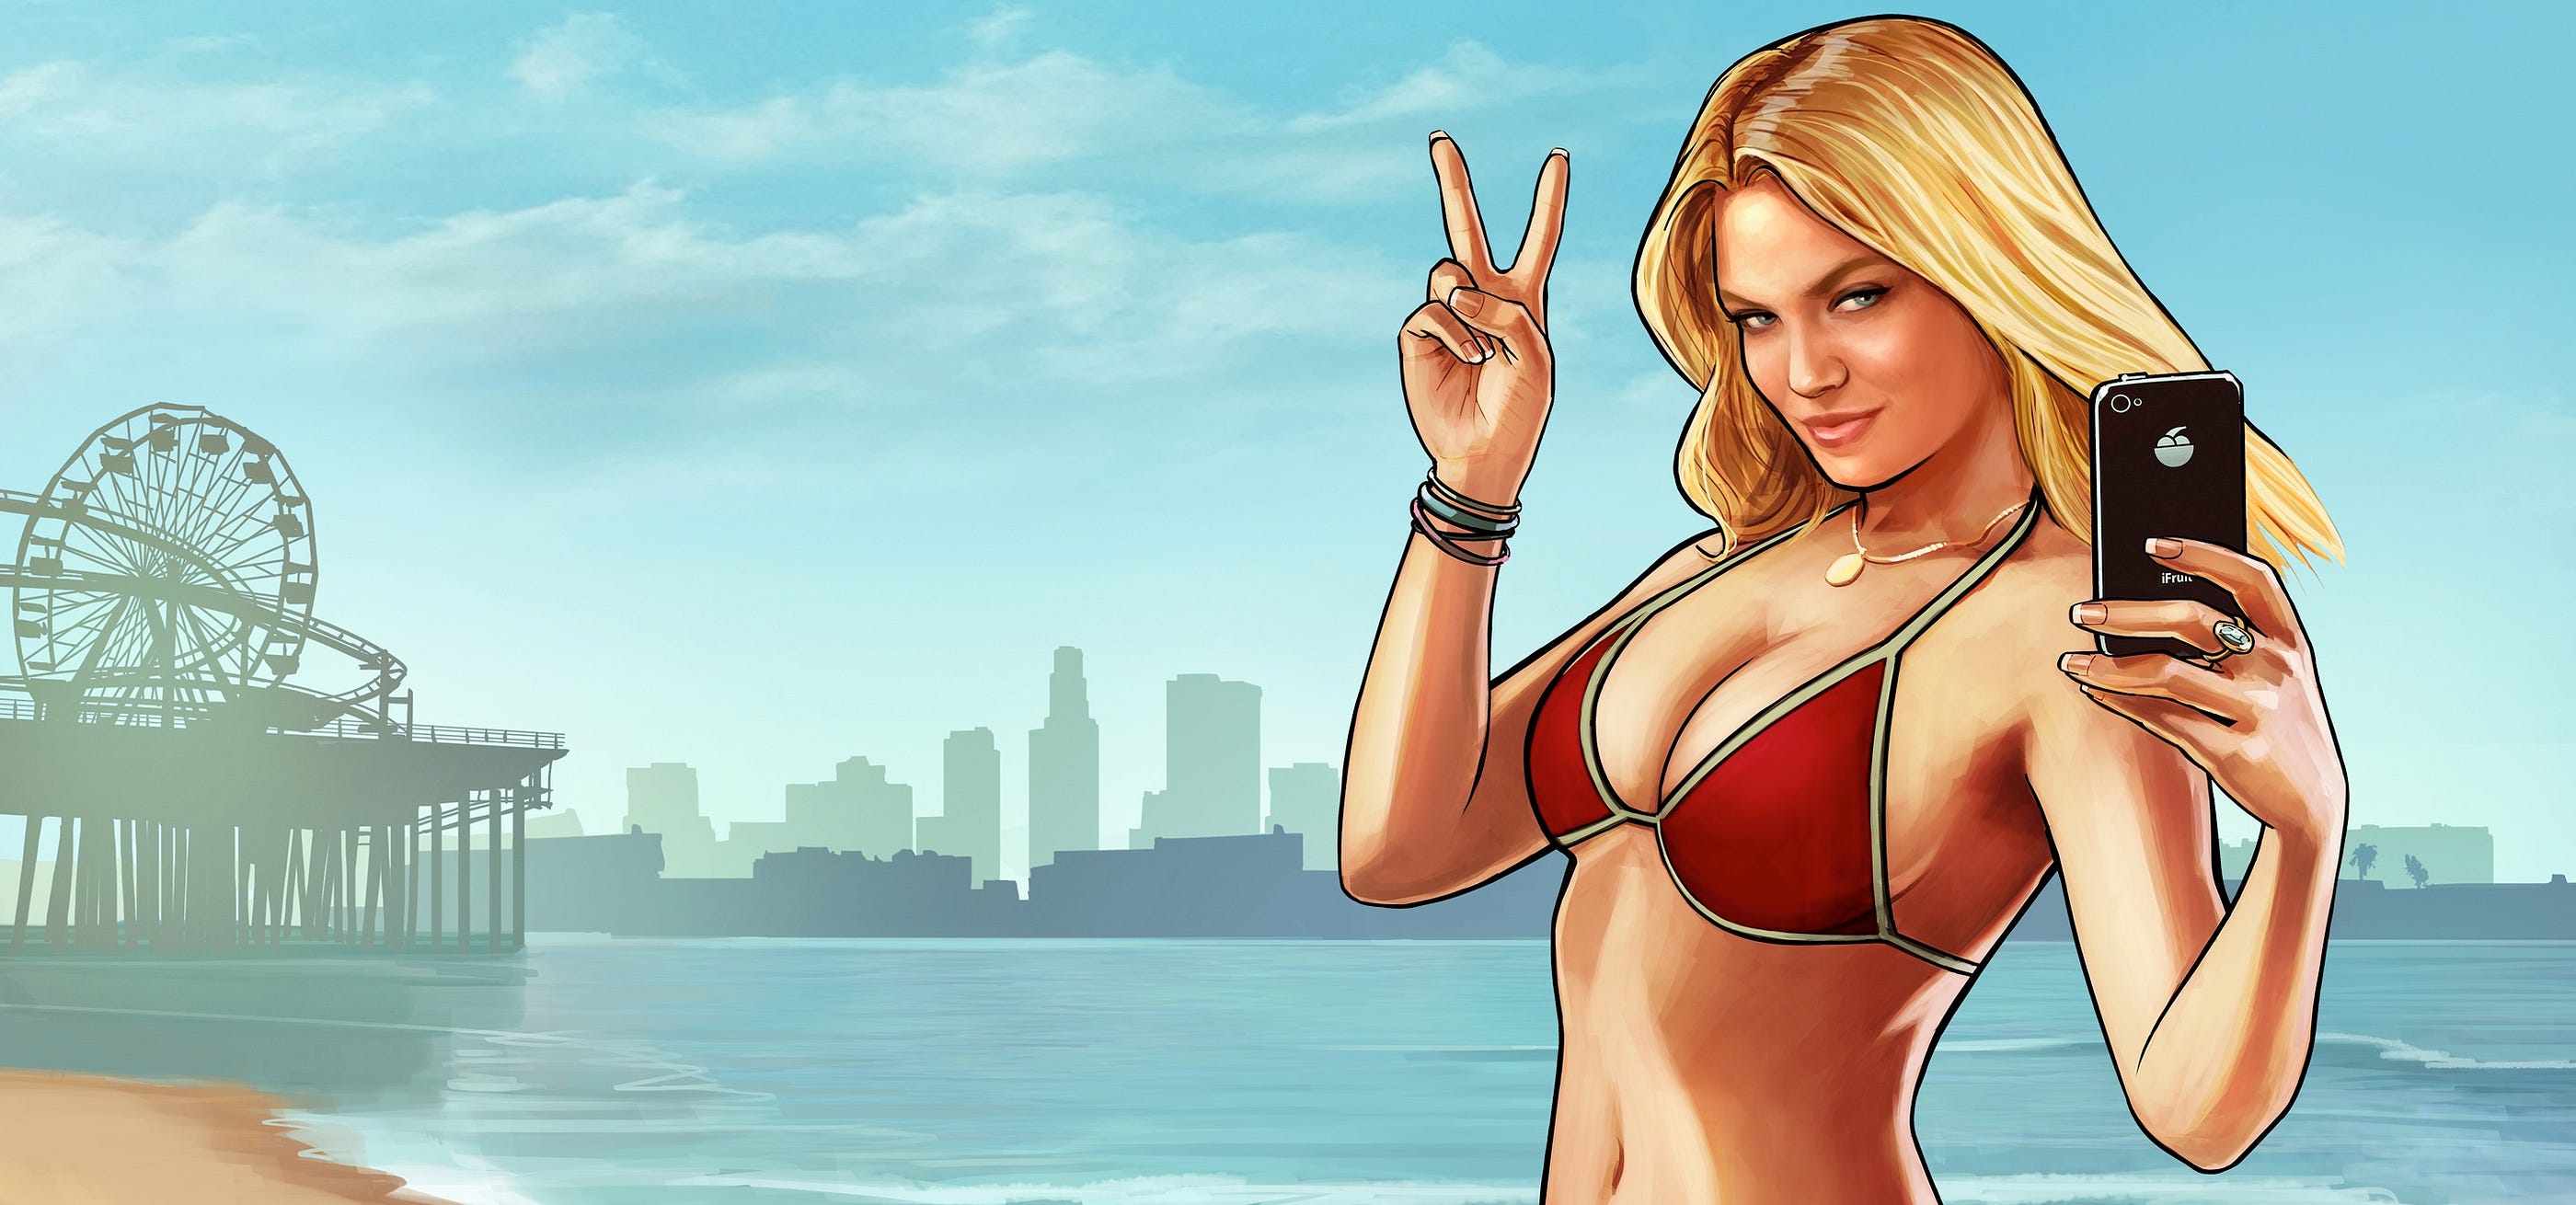 Gta Cover Girls Porn - The Grand Theft Plan. How publisher Rockstar Games reusedâ€¦ | by Marcel  Klimo | Medium